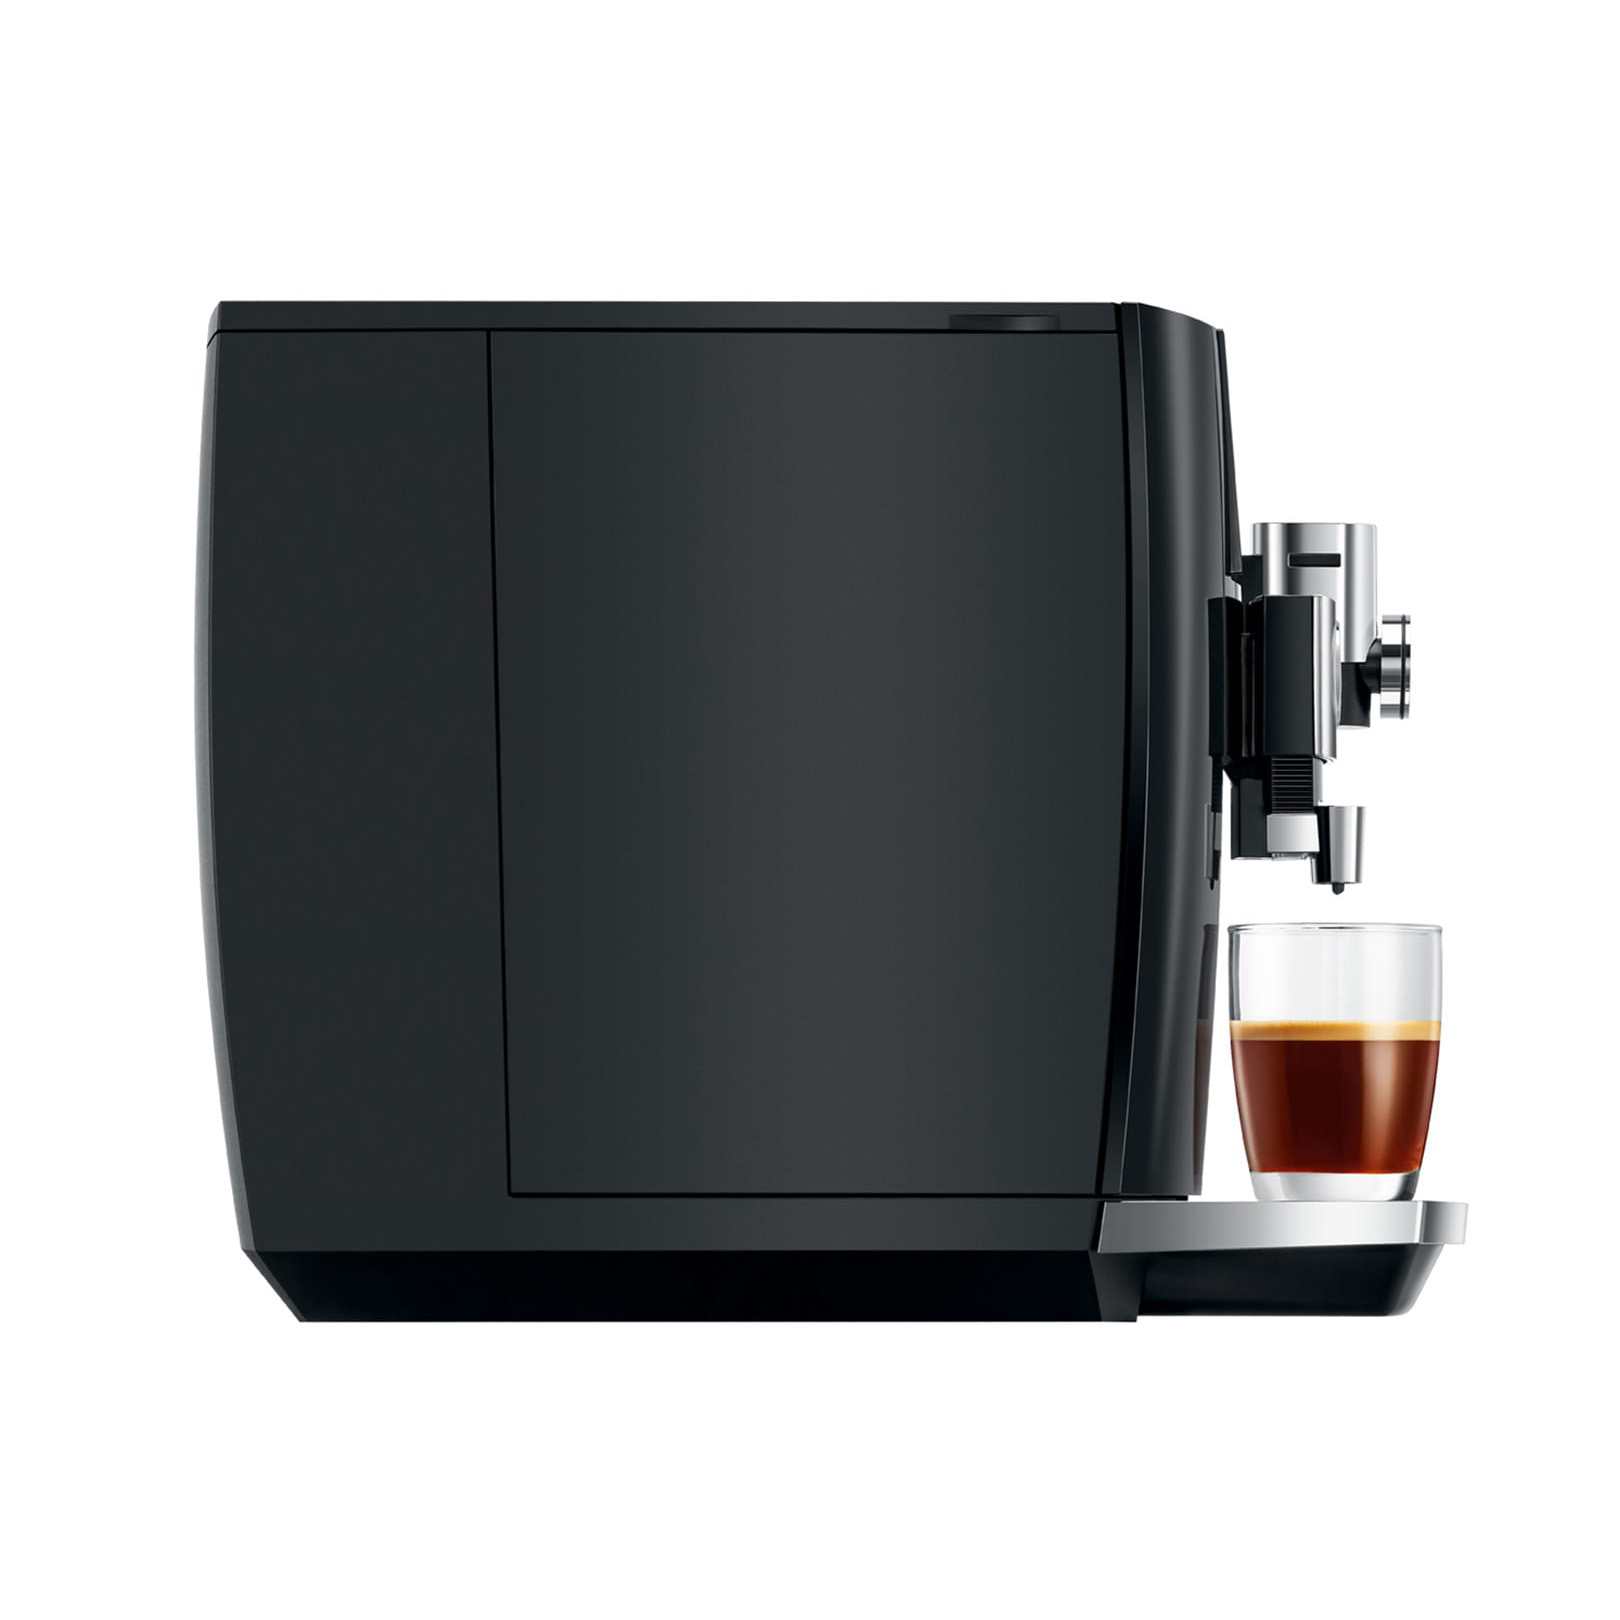 Jura - J8 Piano Black Superautomatic Espresso Machine - 15557